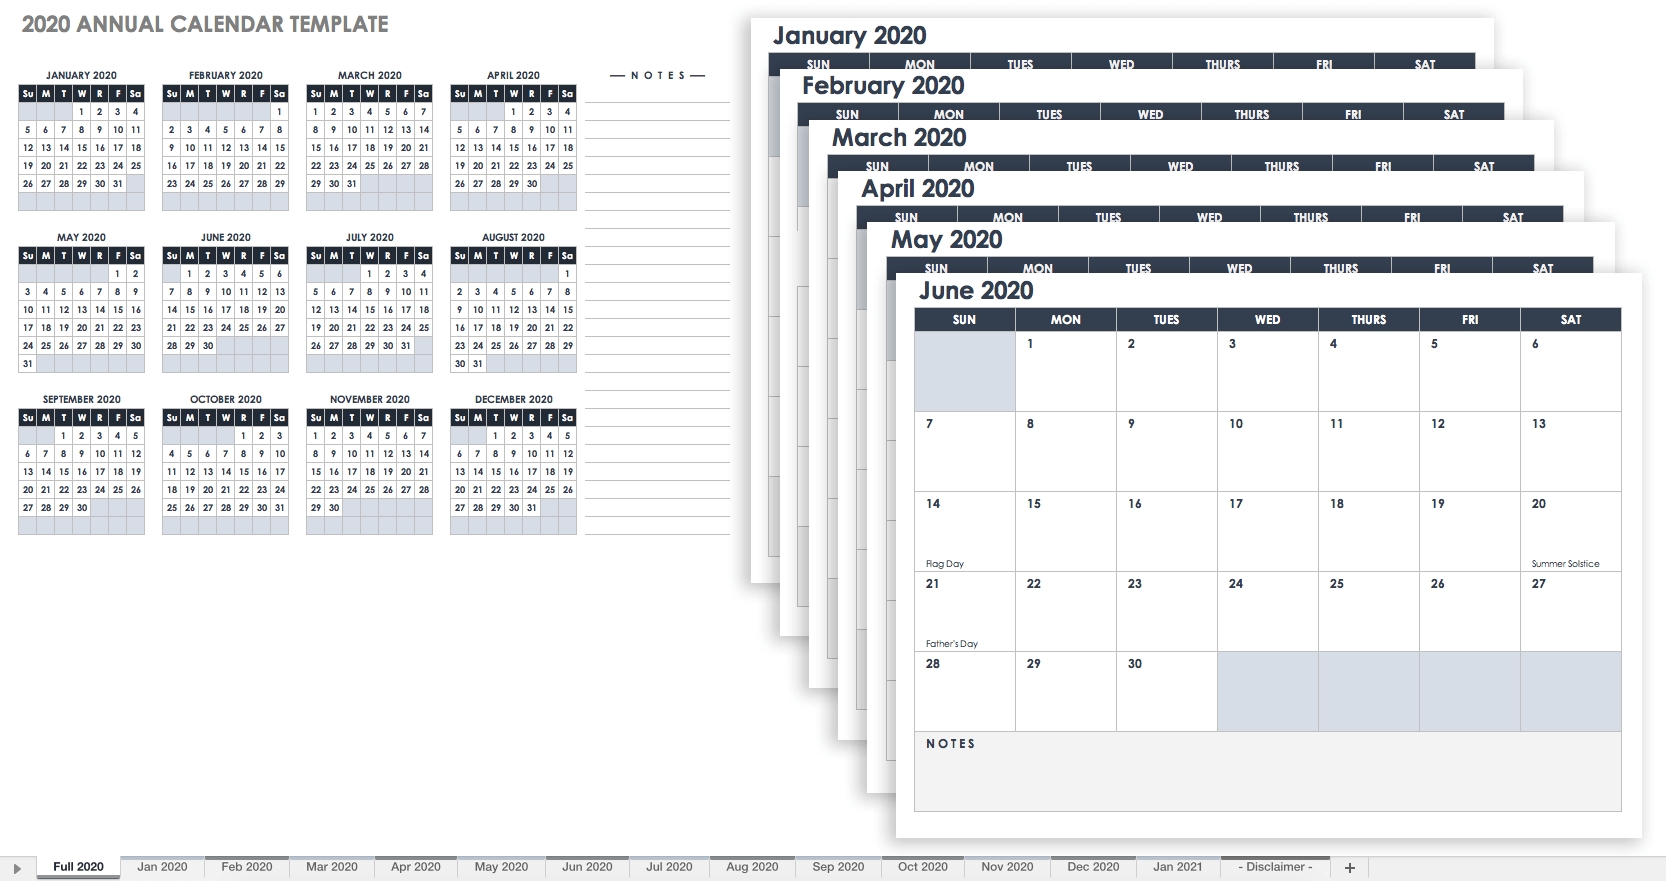 Free Blank Calendar Templates - Smartsheet-3 Month Printable Calendar Templates 2020